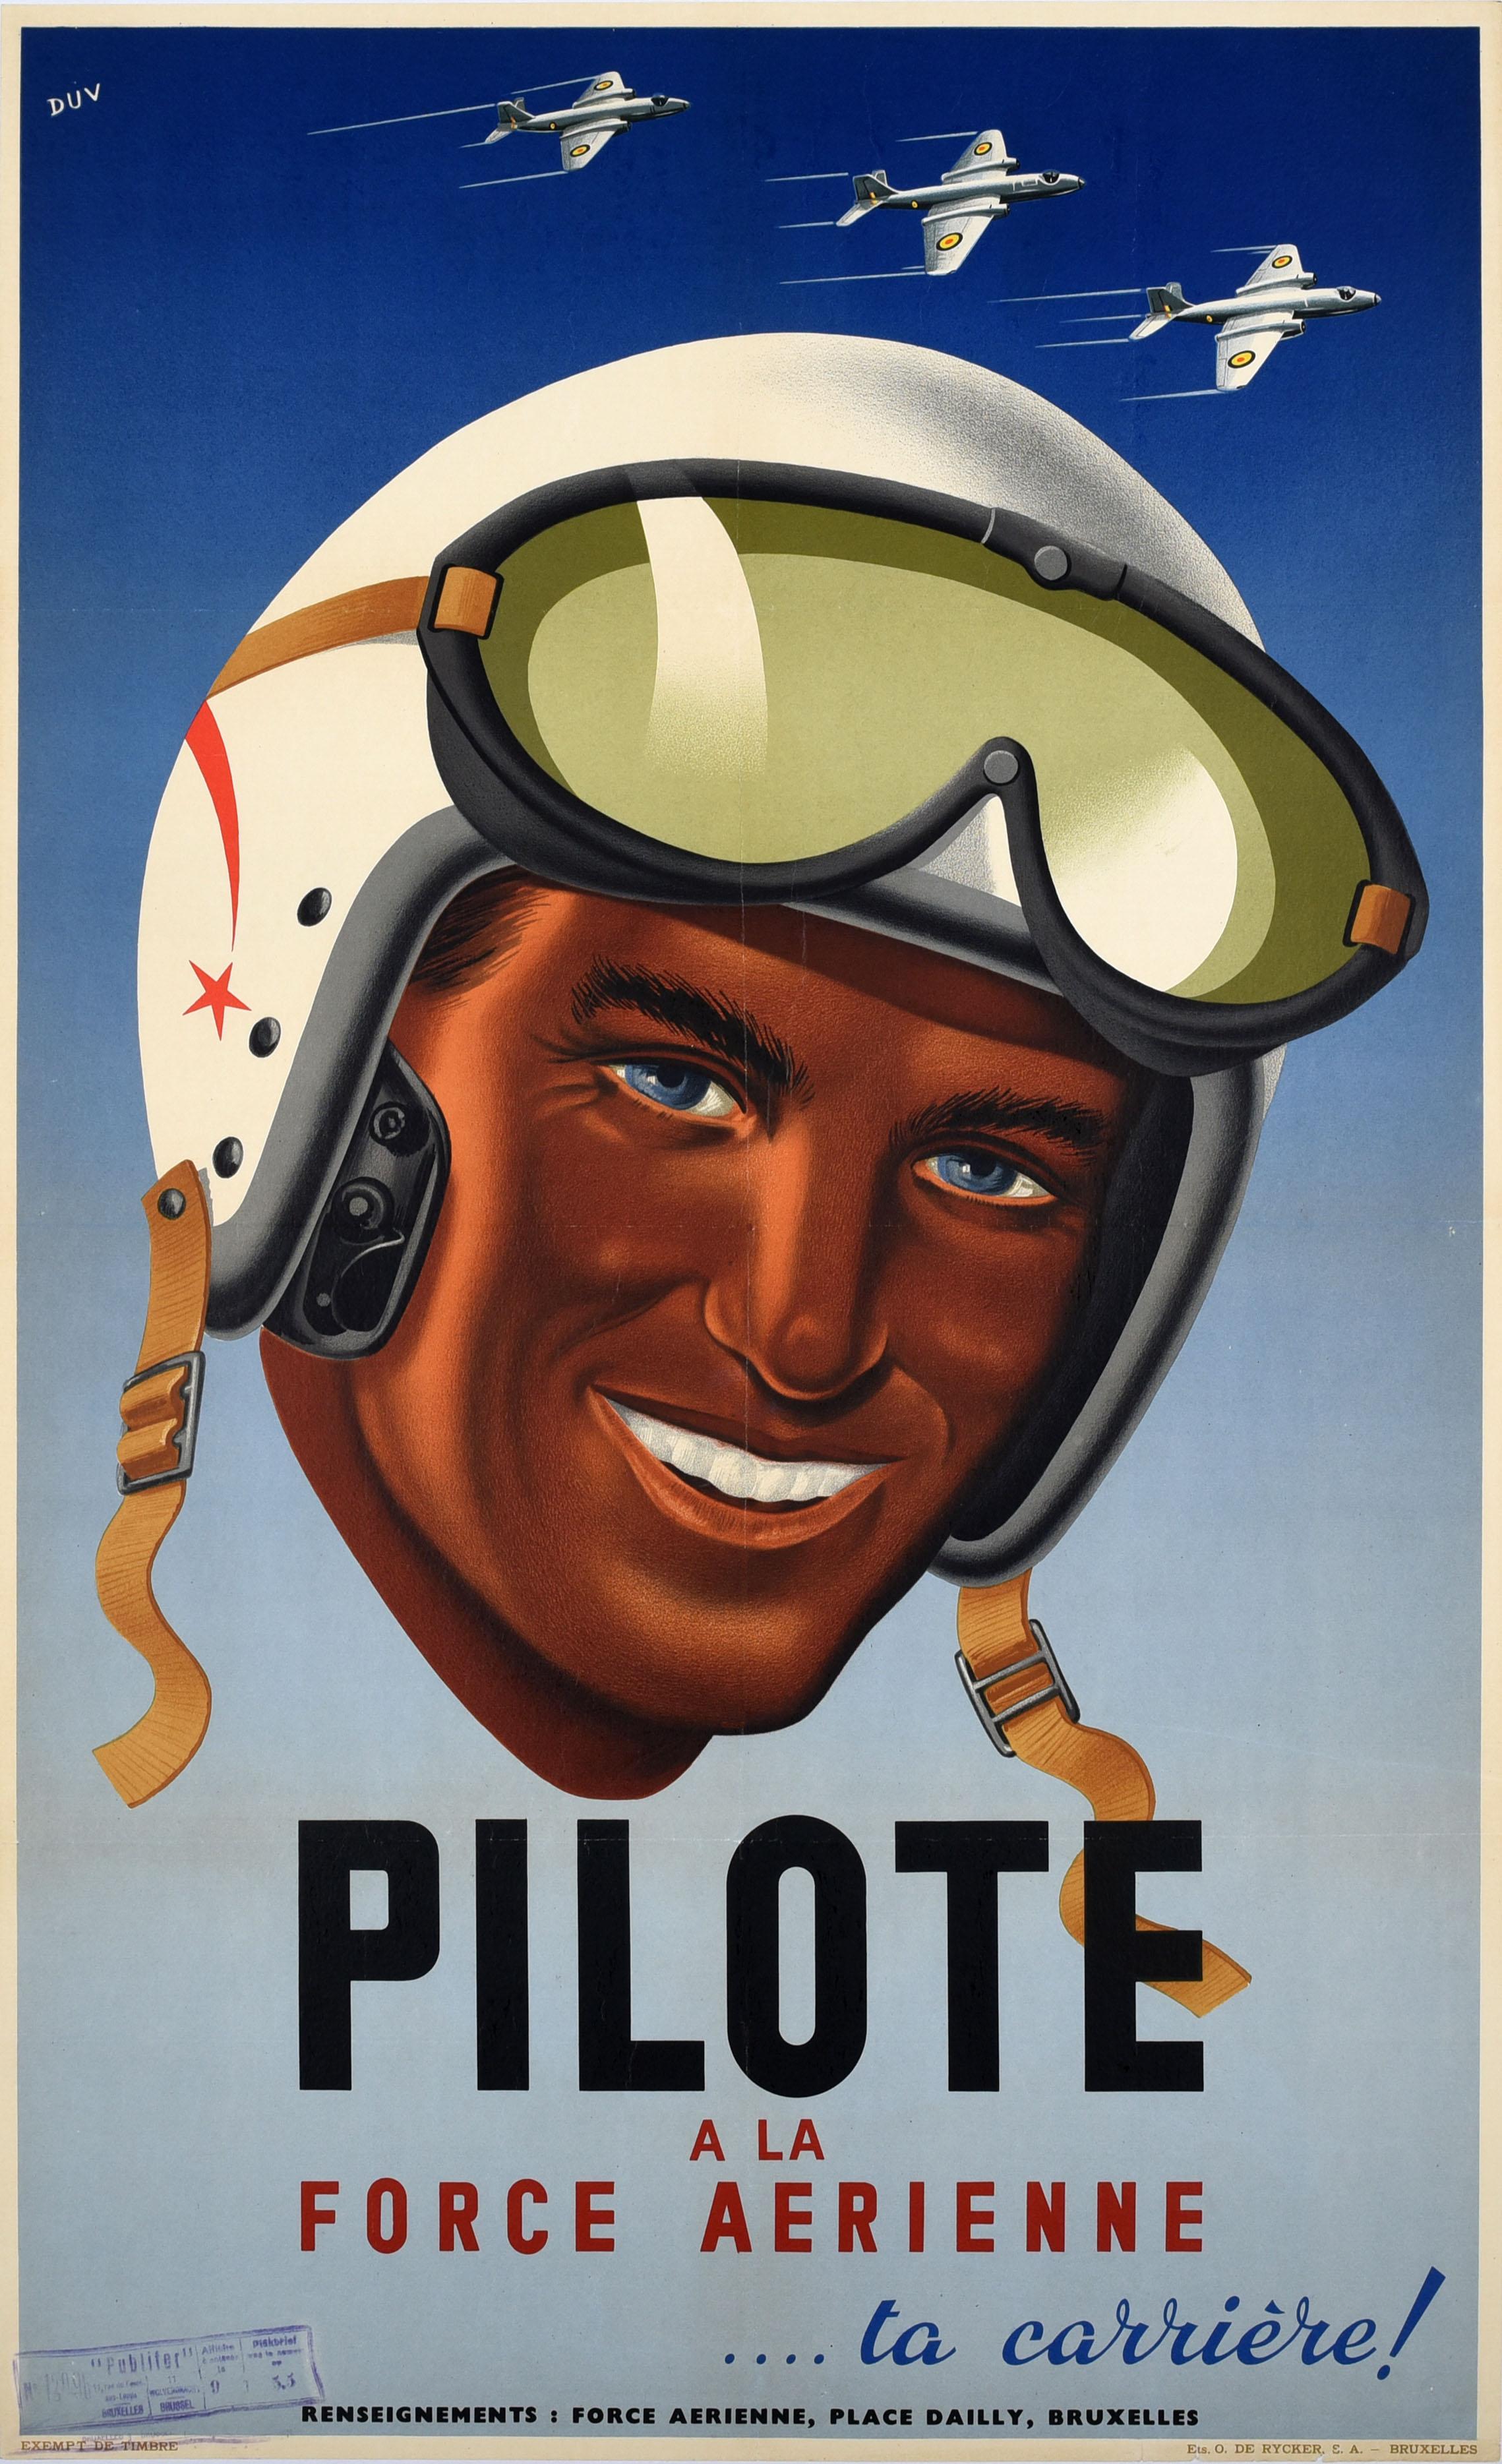 Unknown Print - Original Vintage Recruitment Poster Air Force Pilot Belgium Force Aerienne Army